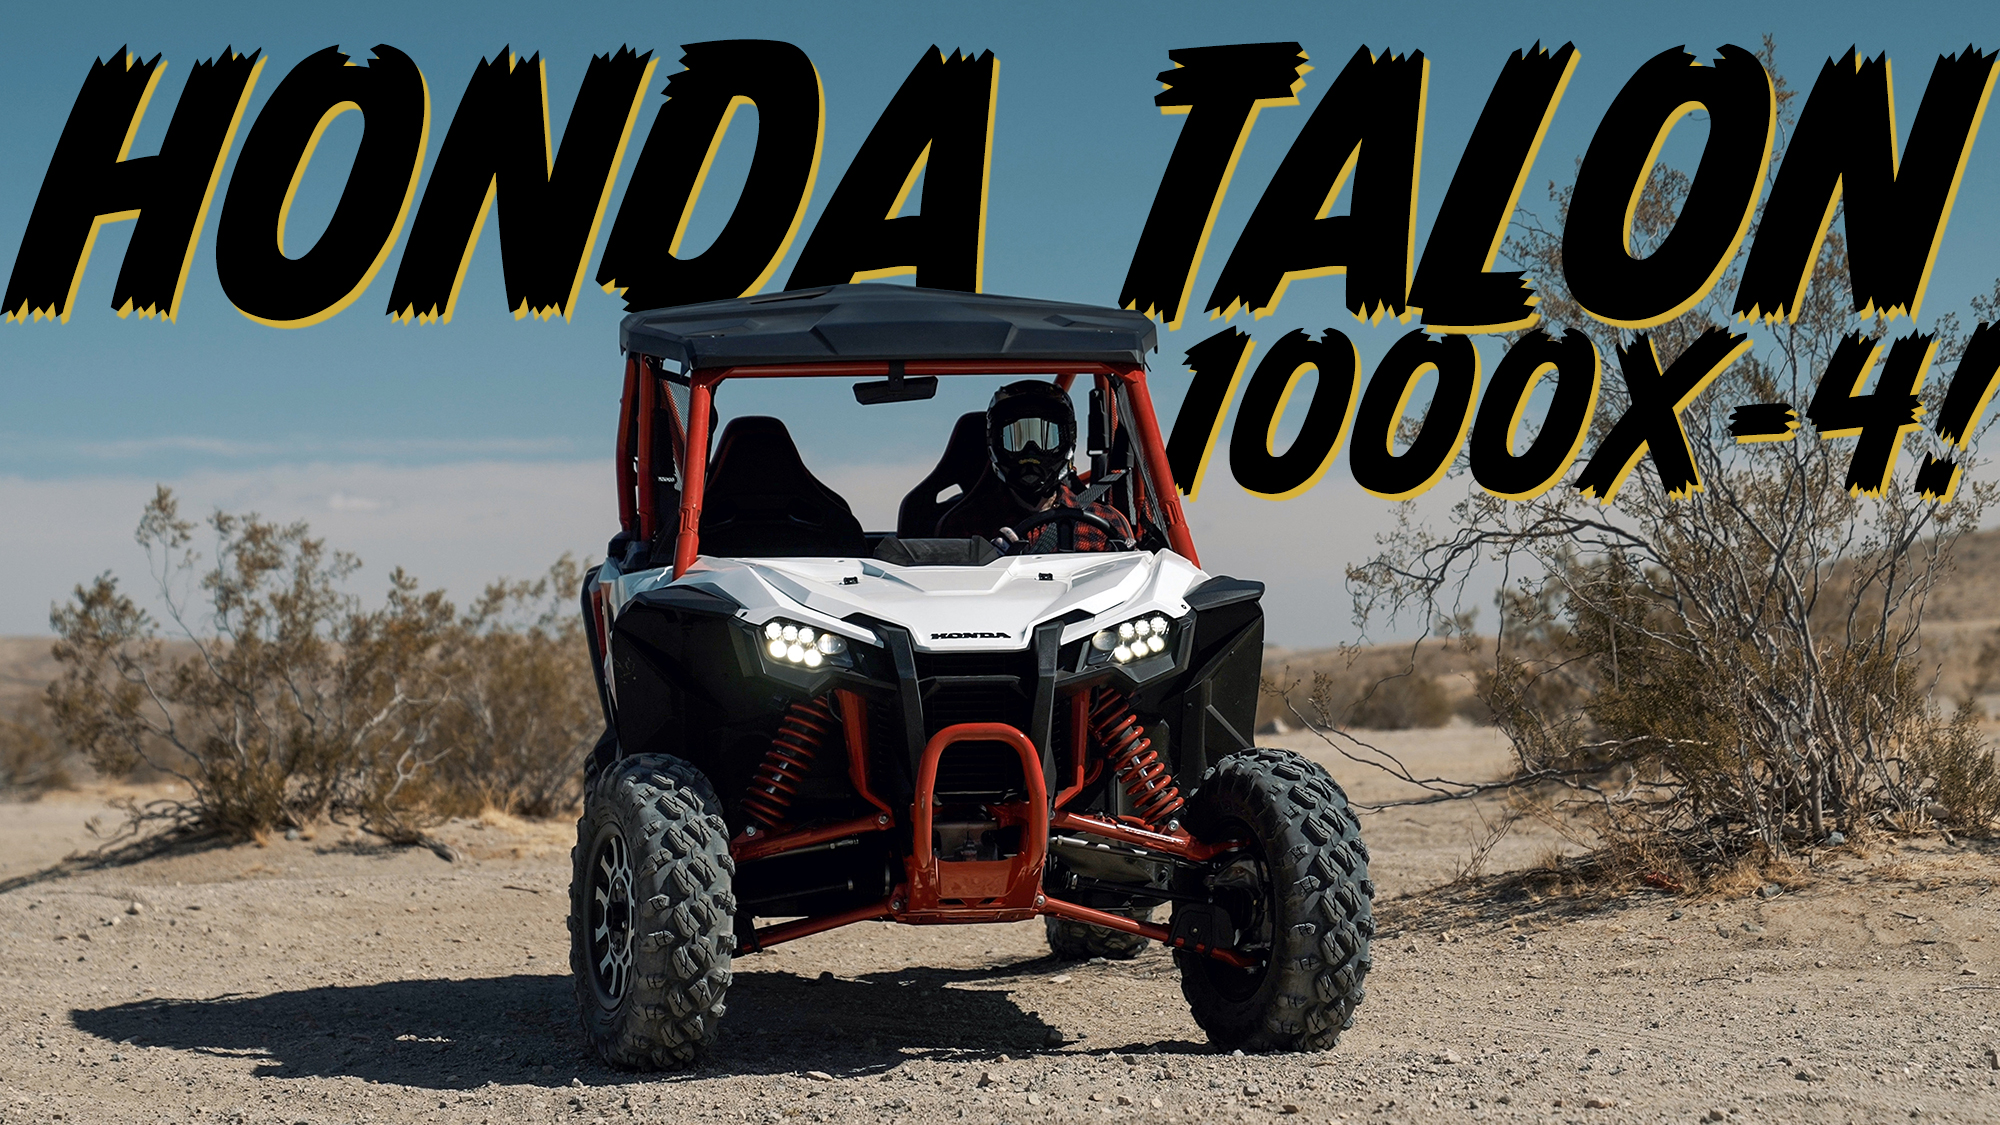 Honda Talon 1000x-4 off-road